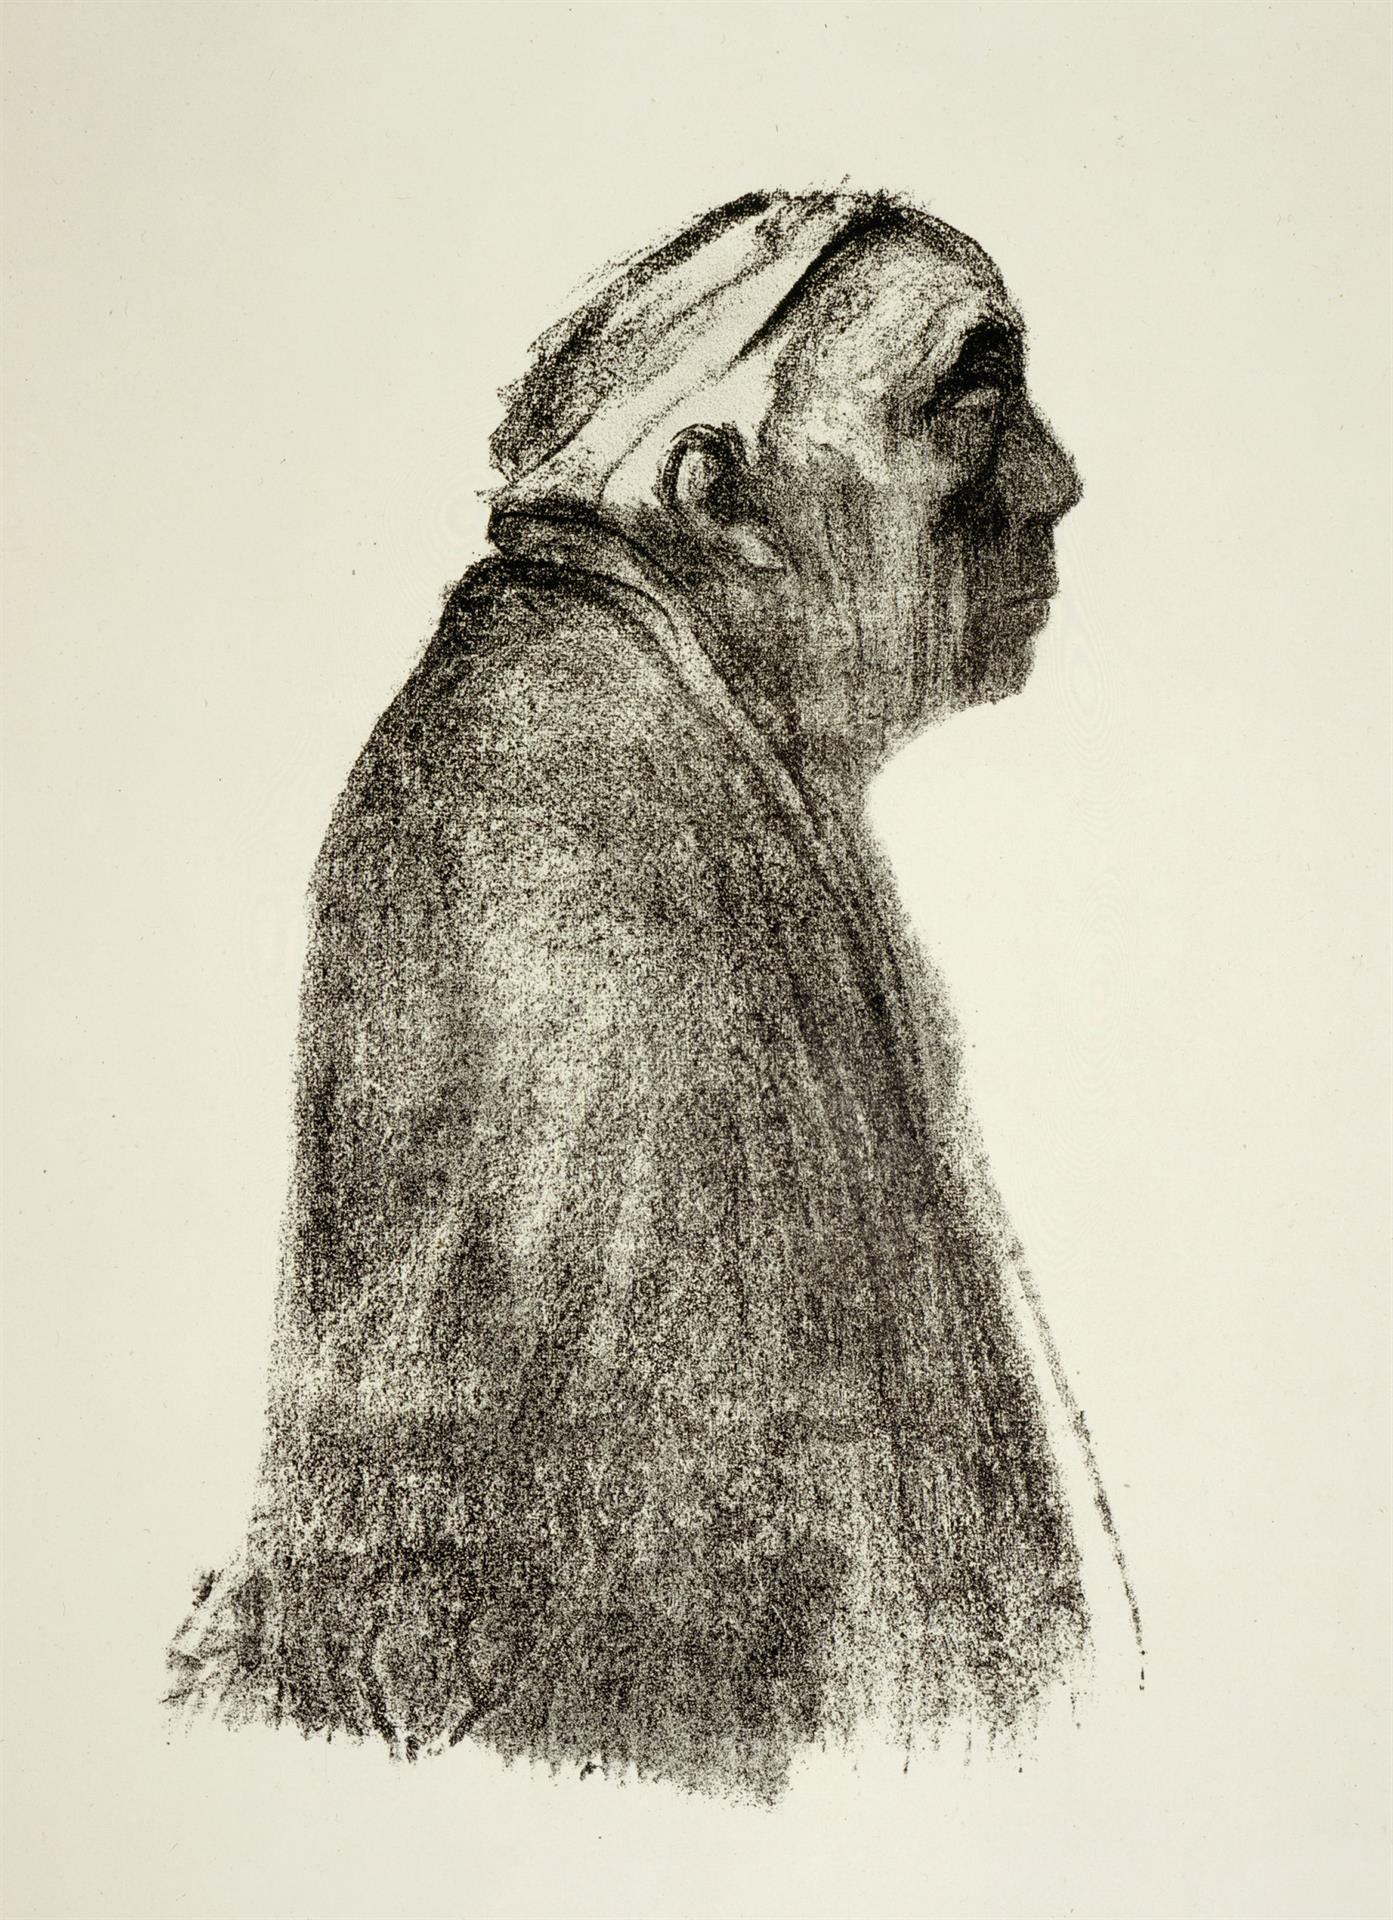 Käthe Kollwitz, Autoportrait, profil droit, 1938 ?, lithographie au crayon (report), Kn 273 III, Collection Kollwitz de Cologne © Käthe Kollwitz Museum Köln 